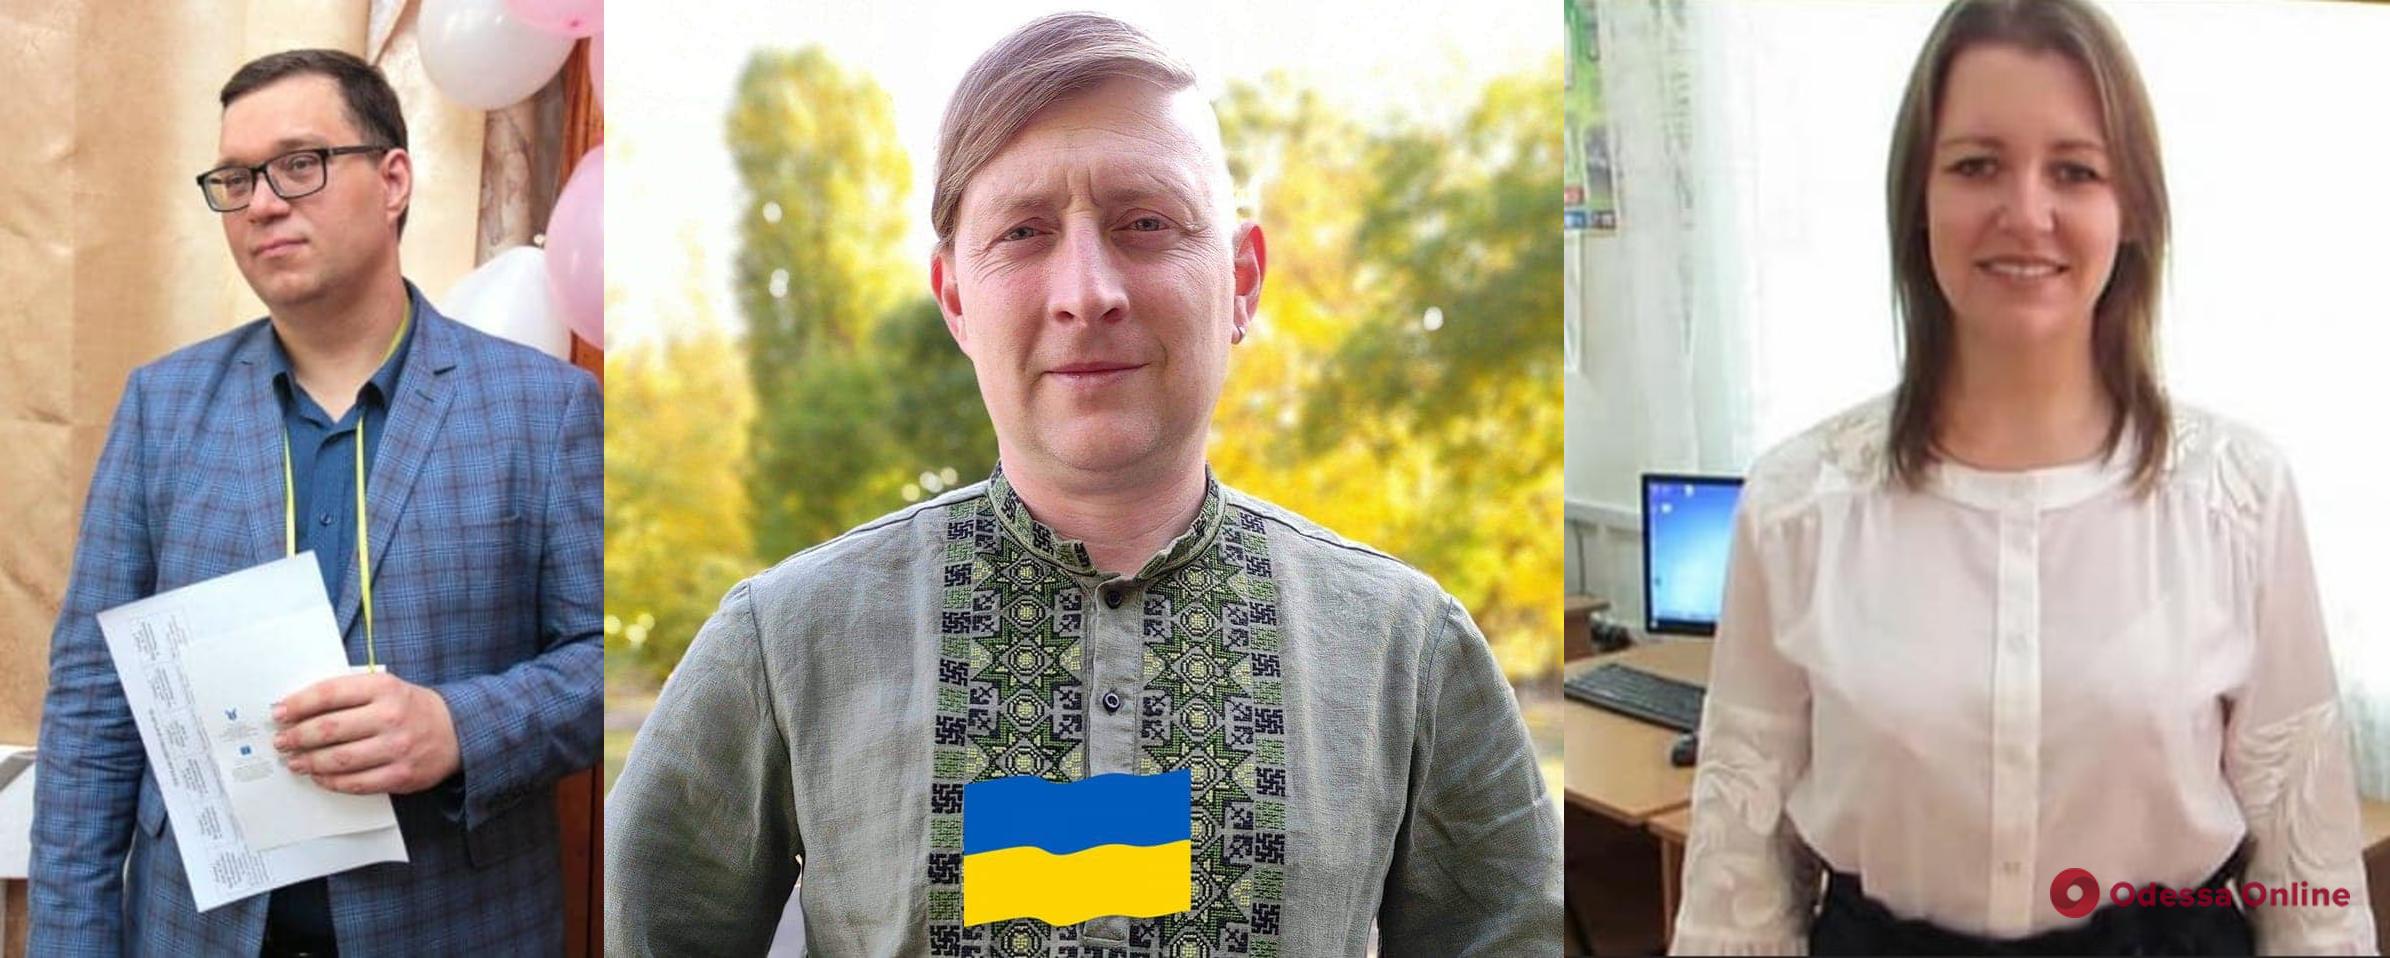 Одеська область стала лідером всеукраїнському конкурсі “Учитель року-2022”